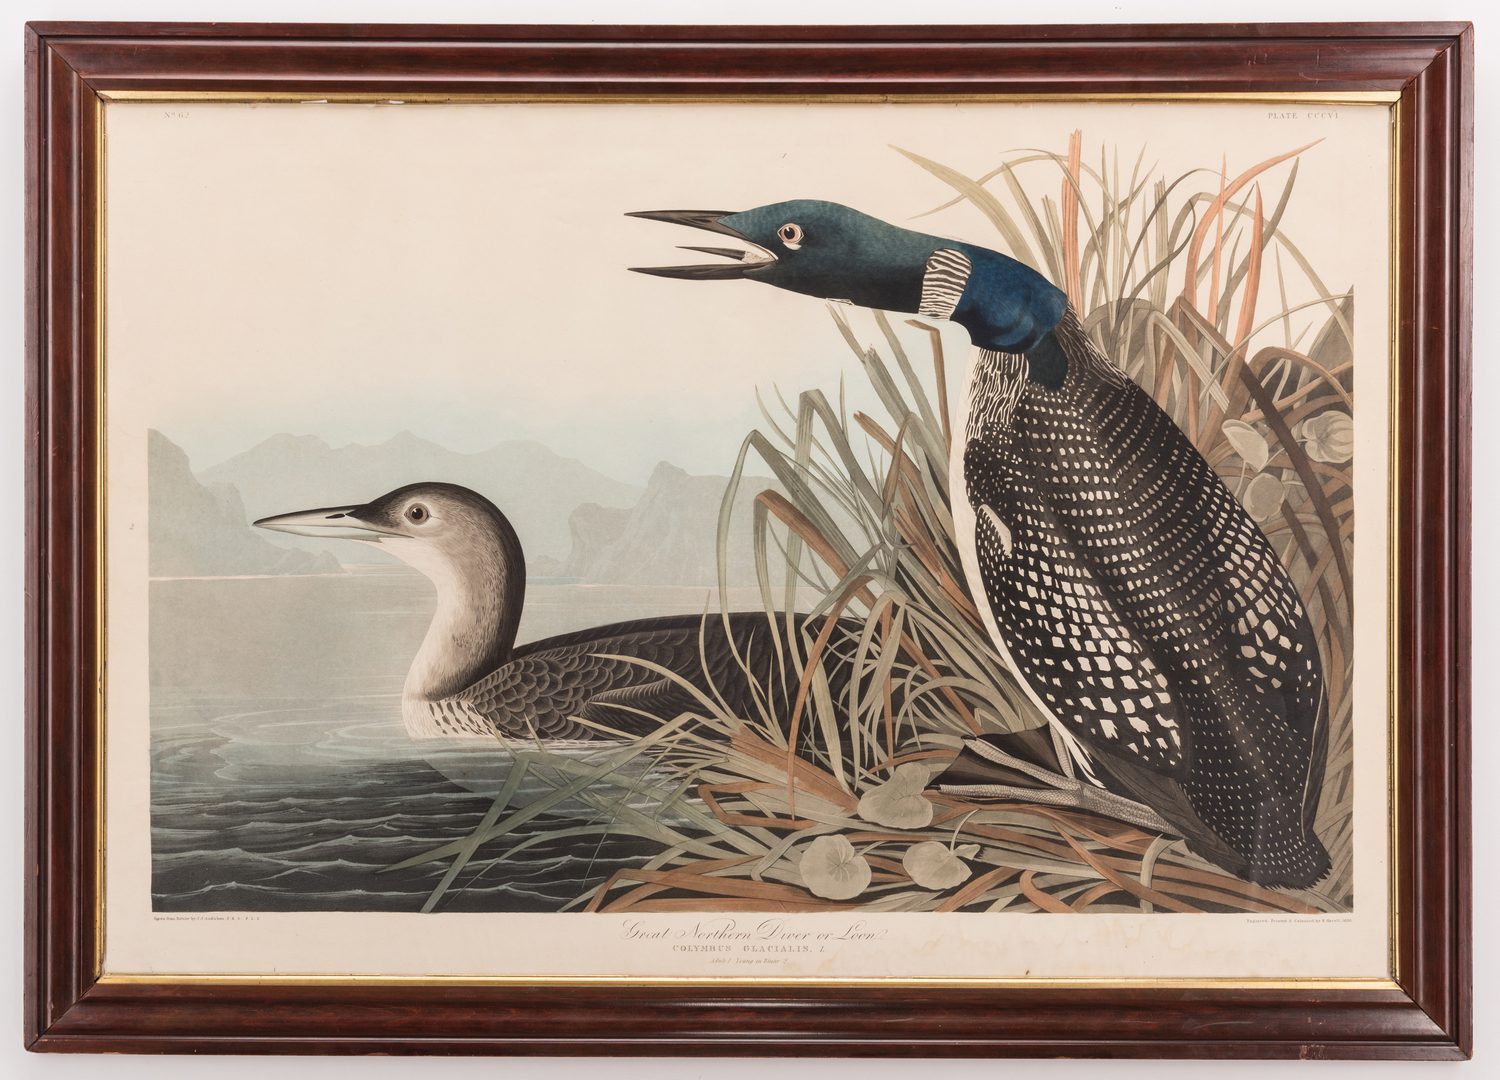 Lot 452: J.J. Audubon, Great Northern Diver or Loon